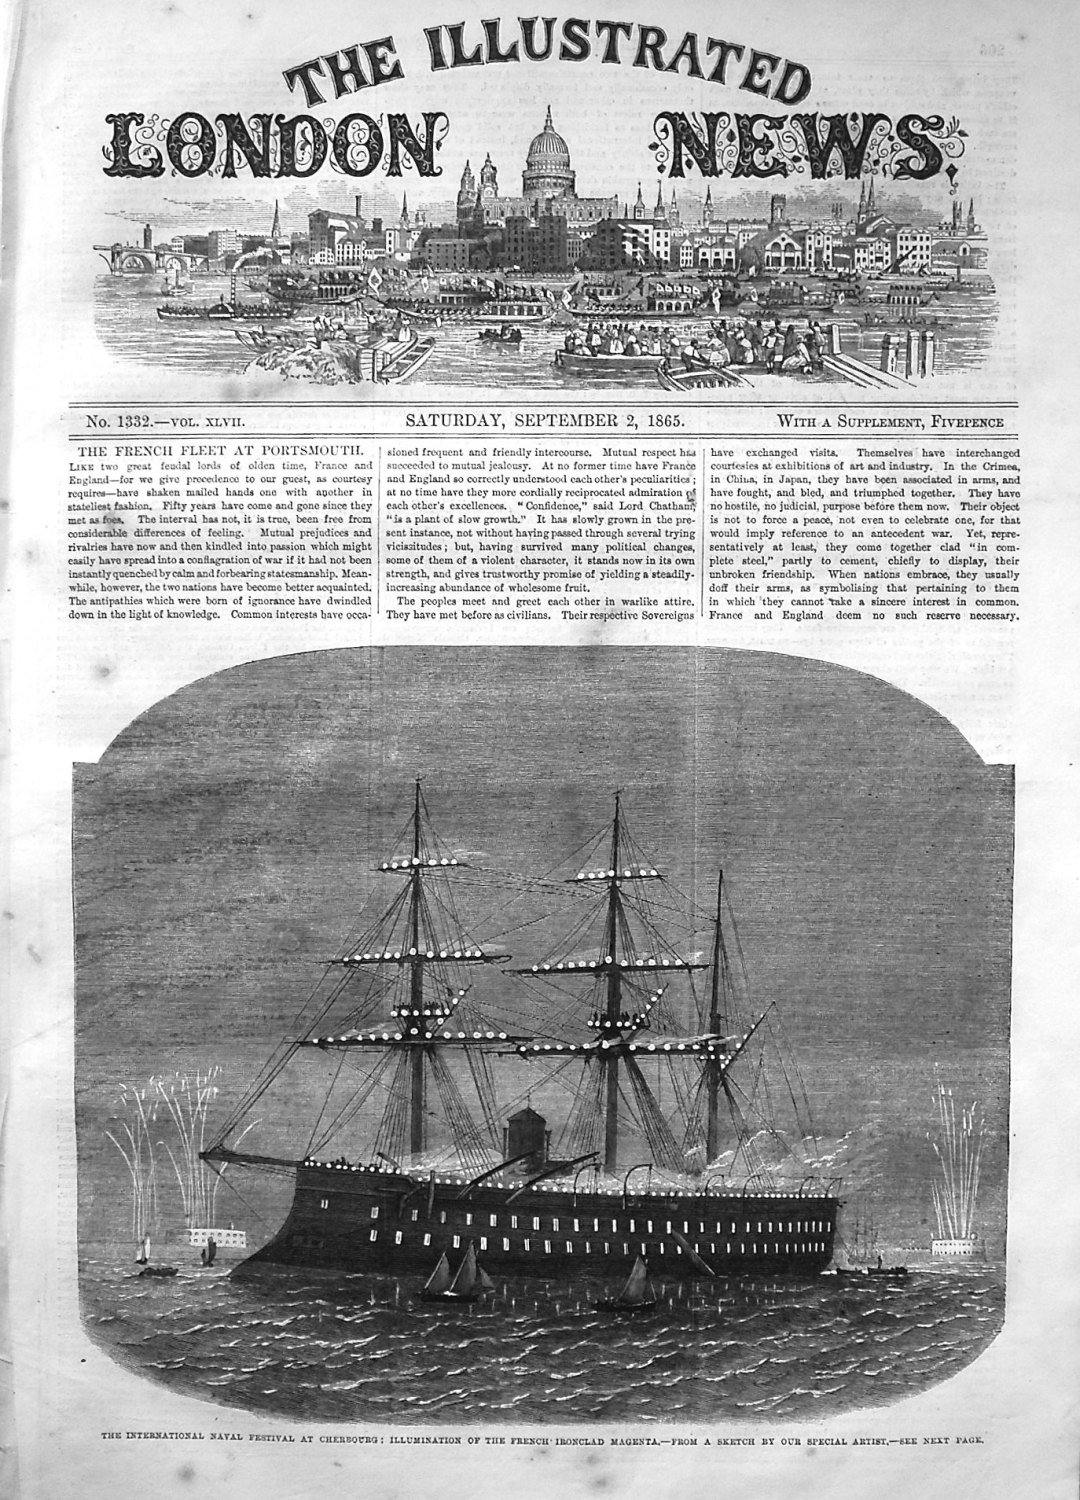 Illustrated London News September 2nd 1865.